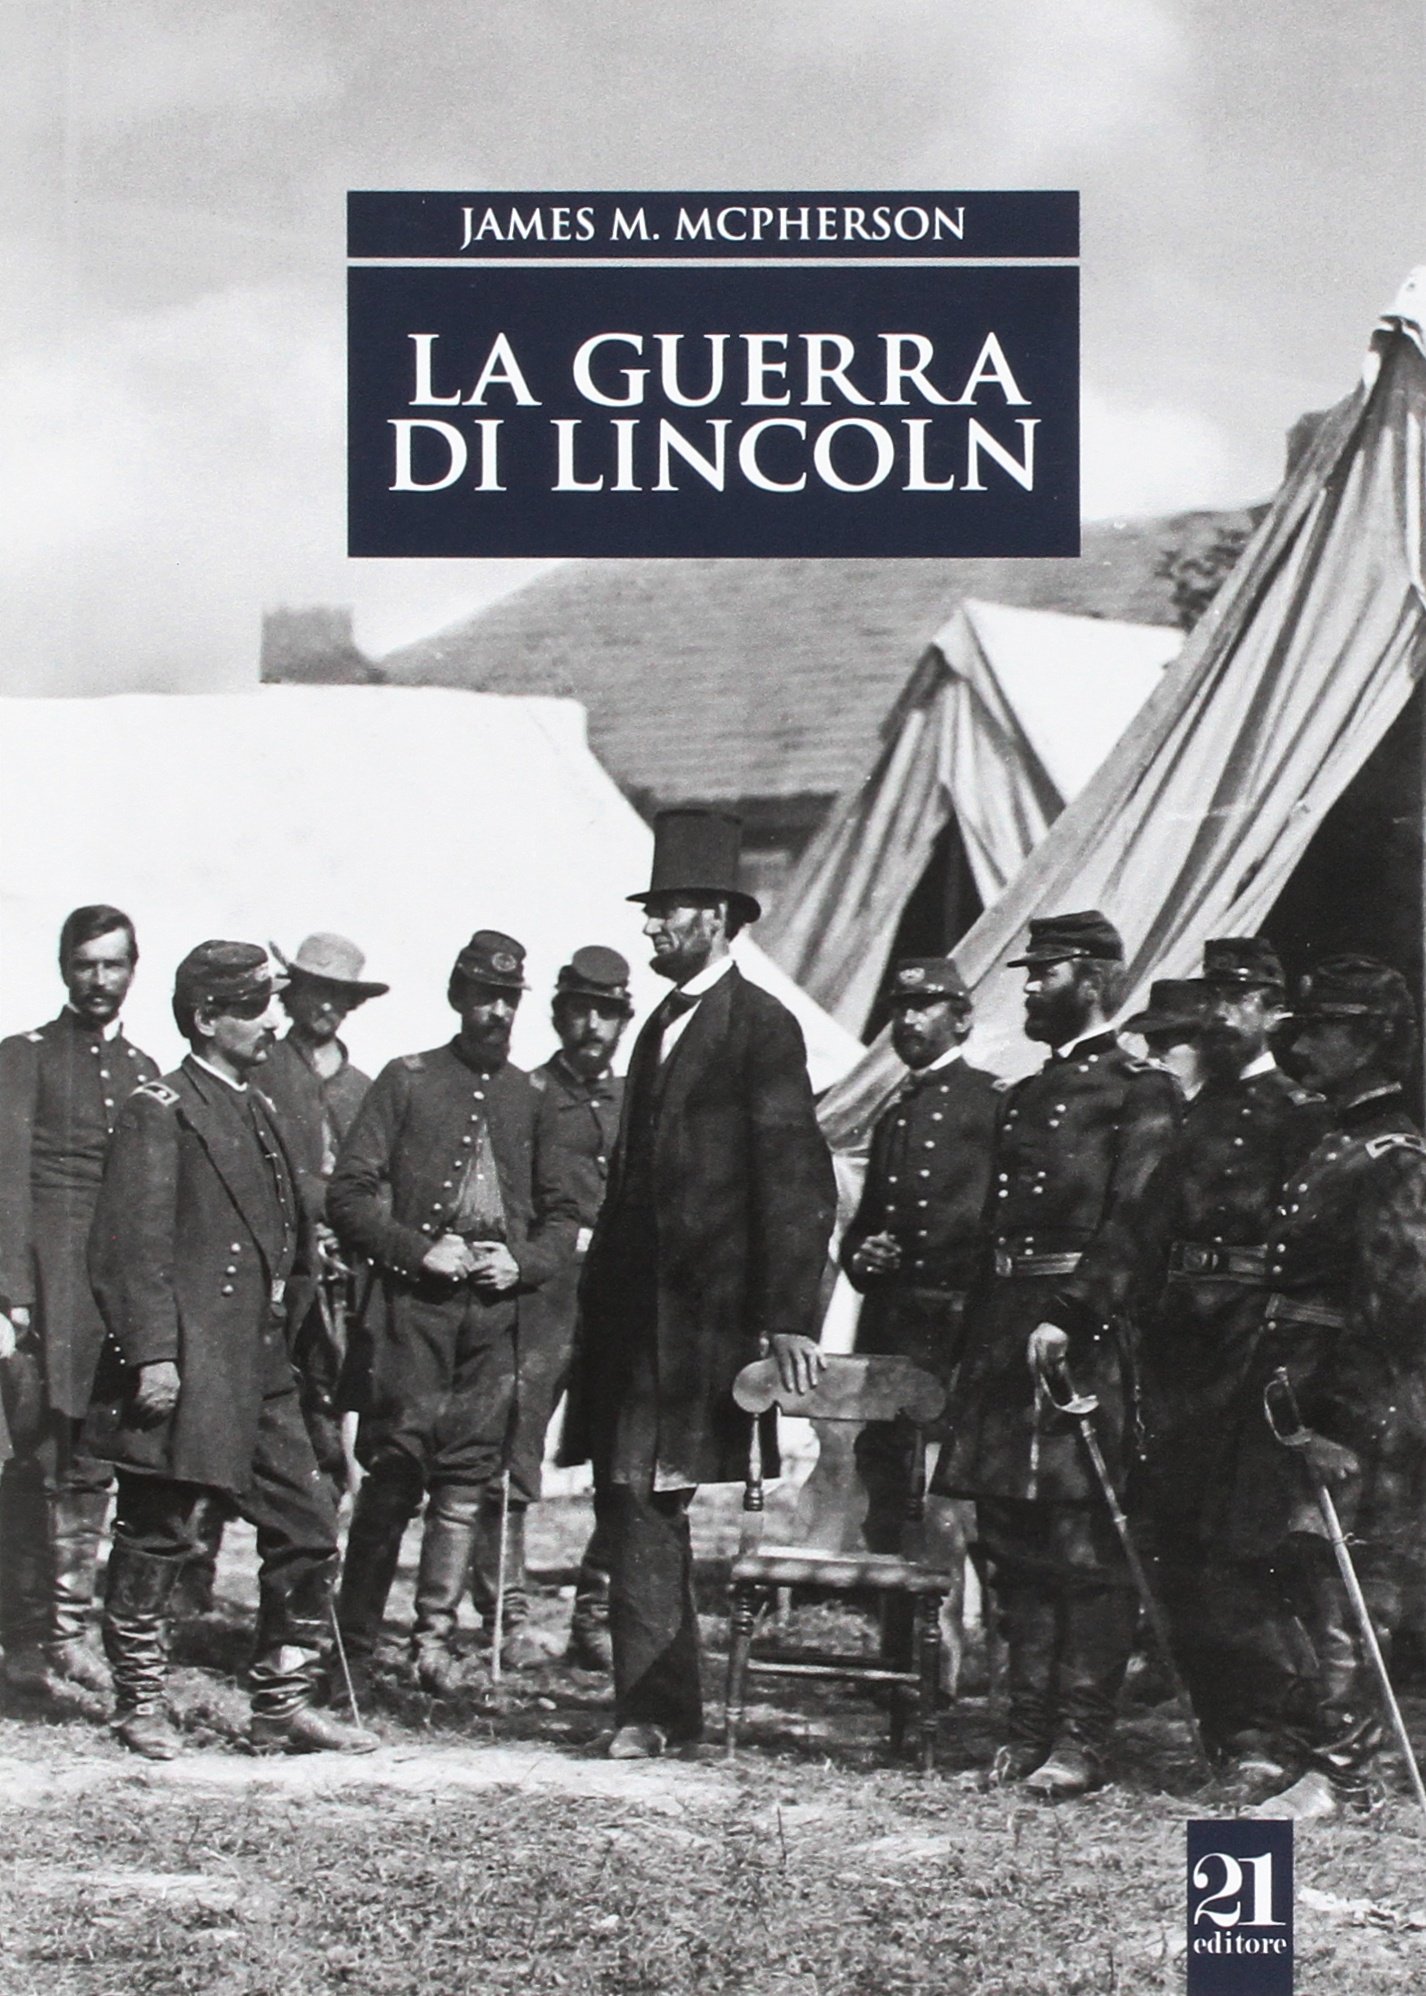 James McPHERSON, <em>La guerra di Lincoln</em>, Palermo, 21 editore, 2017, 350 pp.